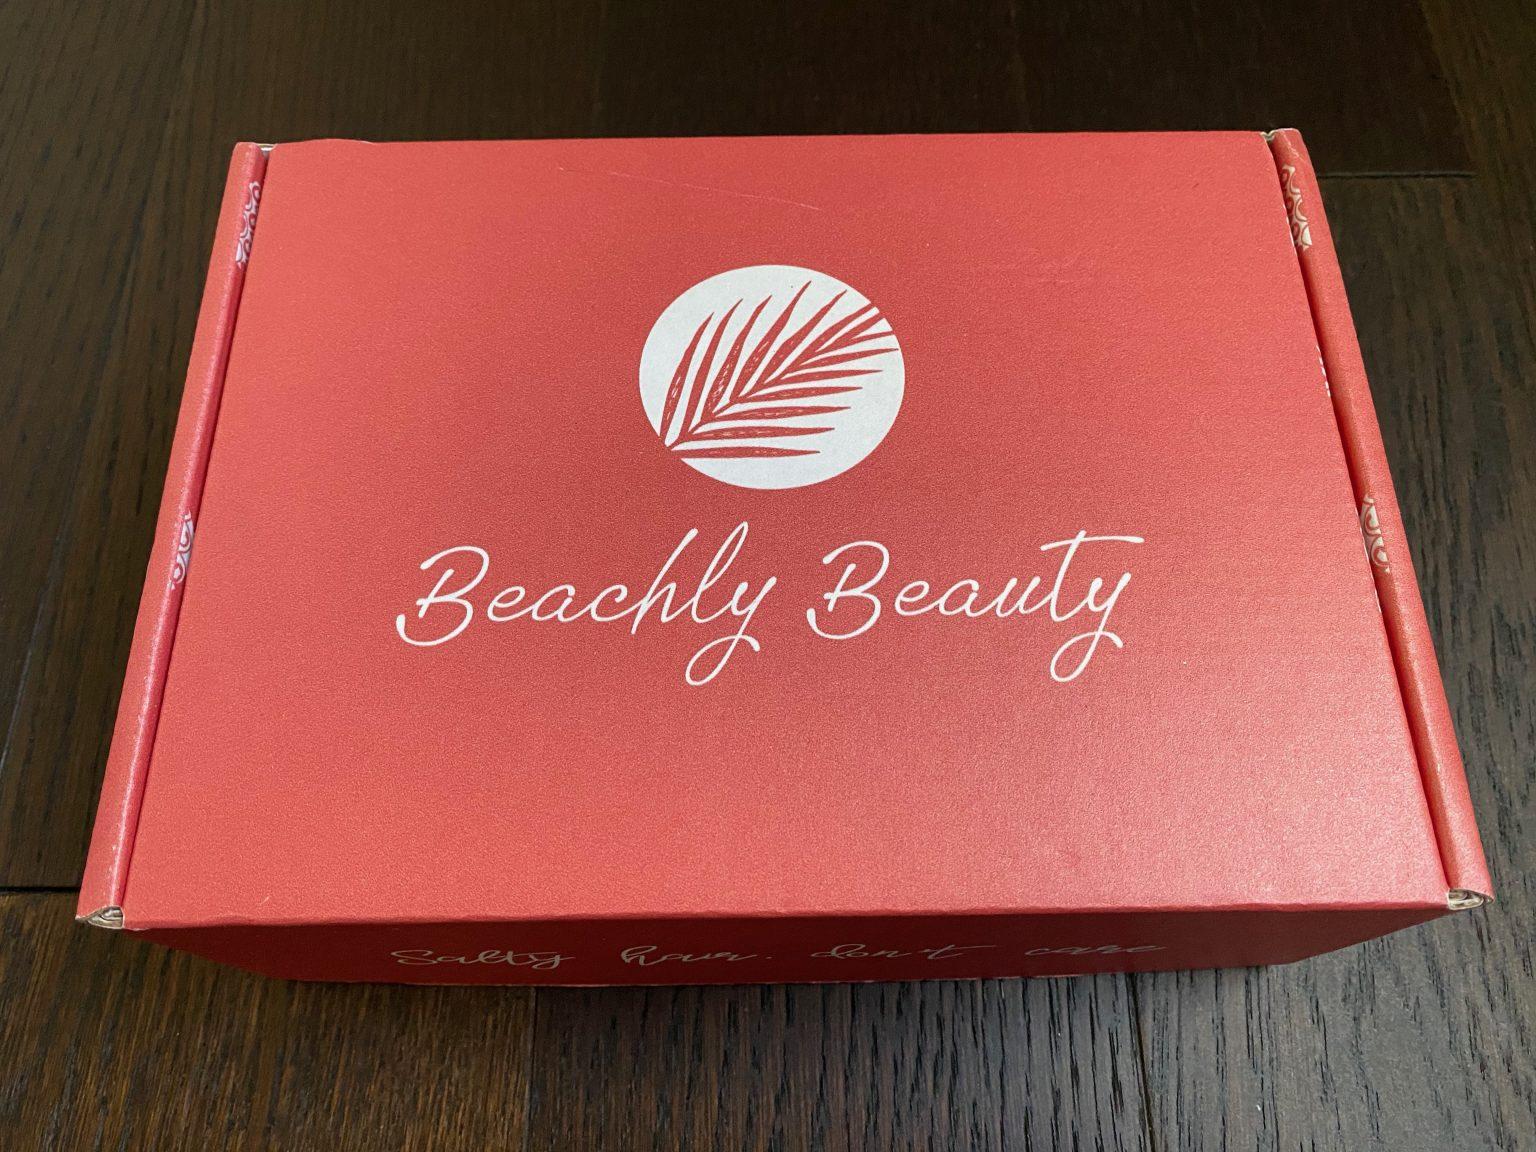 Beachly Beauty Box - May 2021 Review - Subscription Box Ramblings